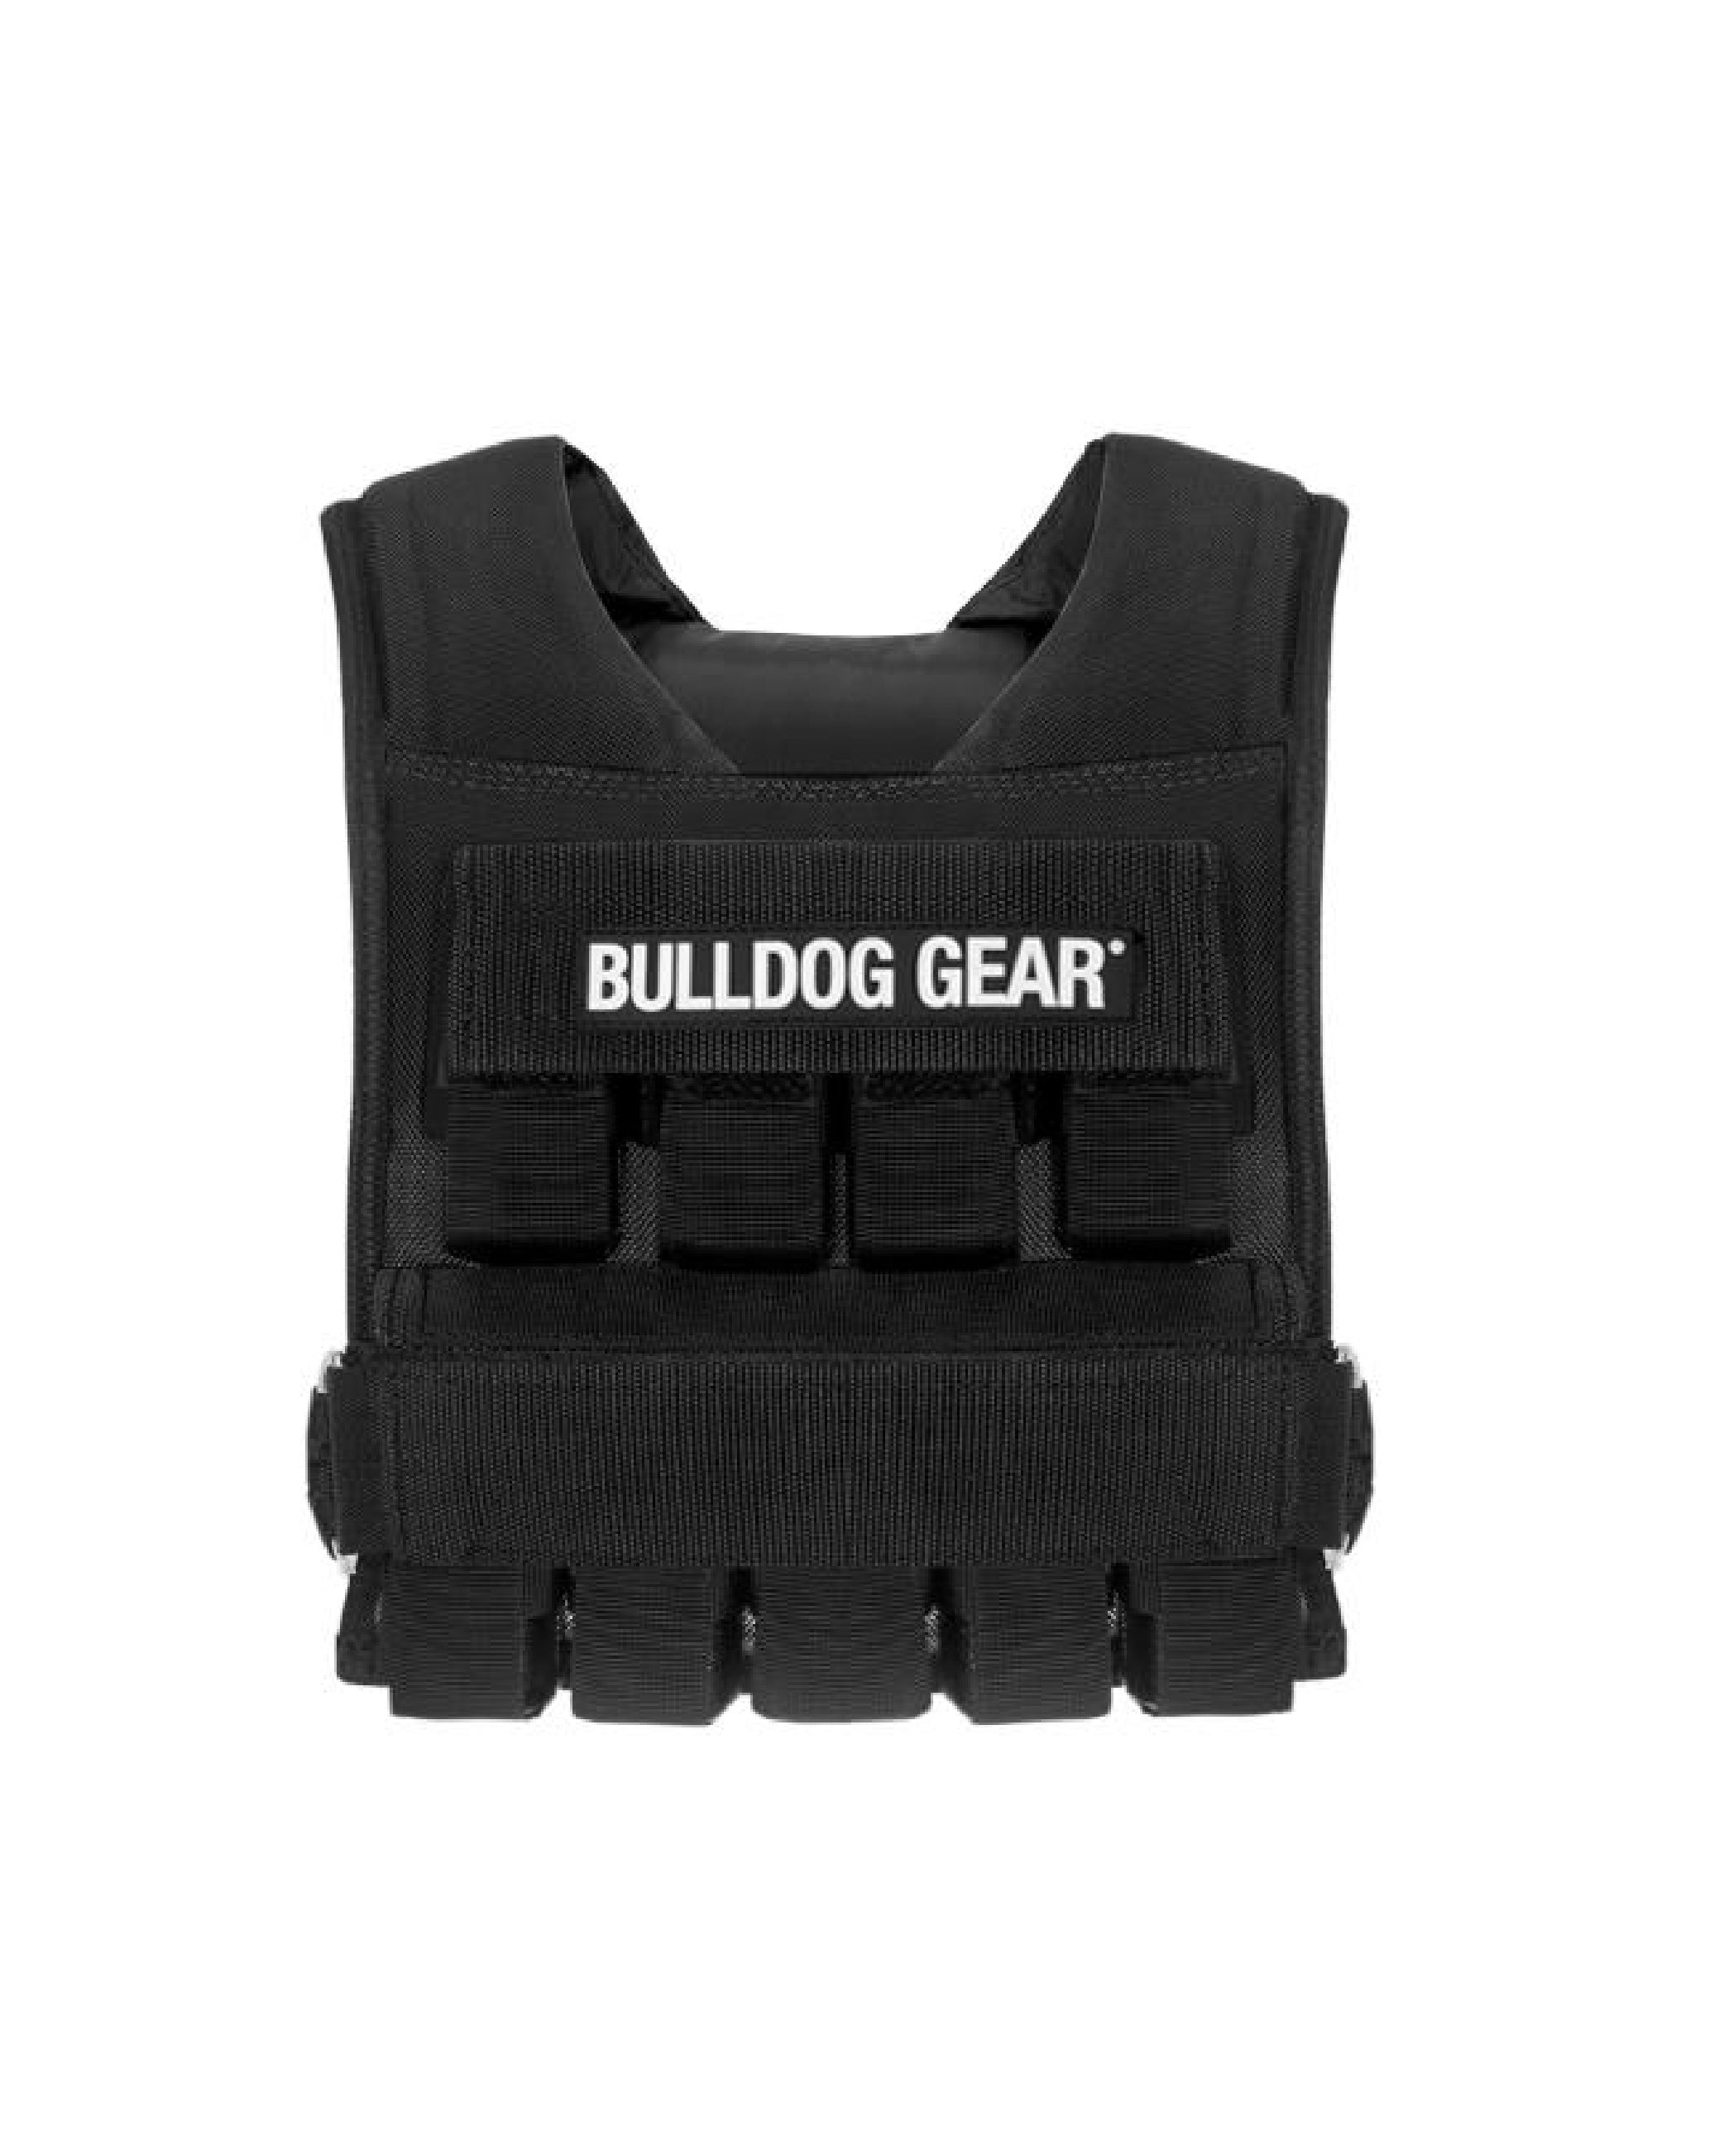 Bulldog Gear 20kg weight vest